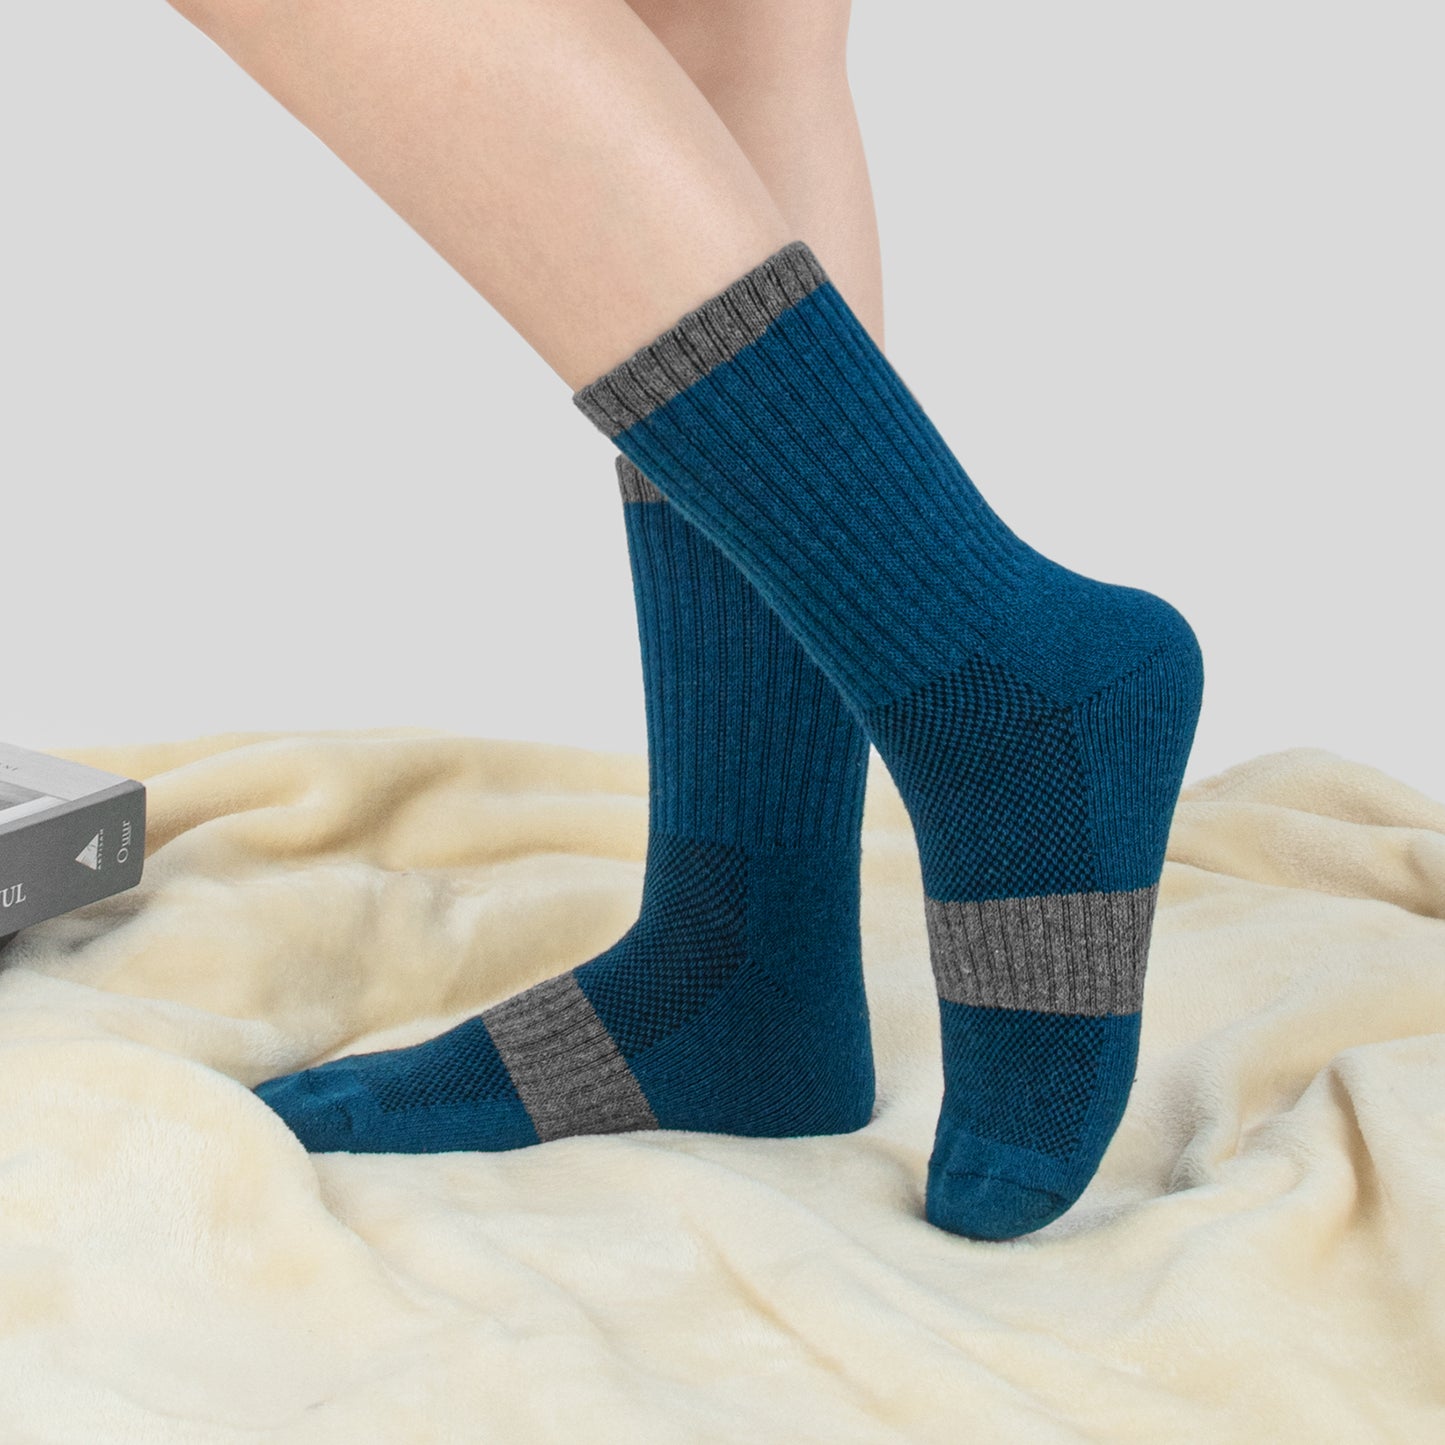 Loritta Wool Hiking Socks for Women Thermal Winter Warm Boot Work Cushion Socks 10 Pairs